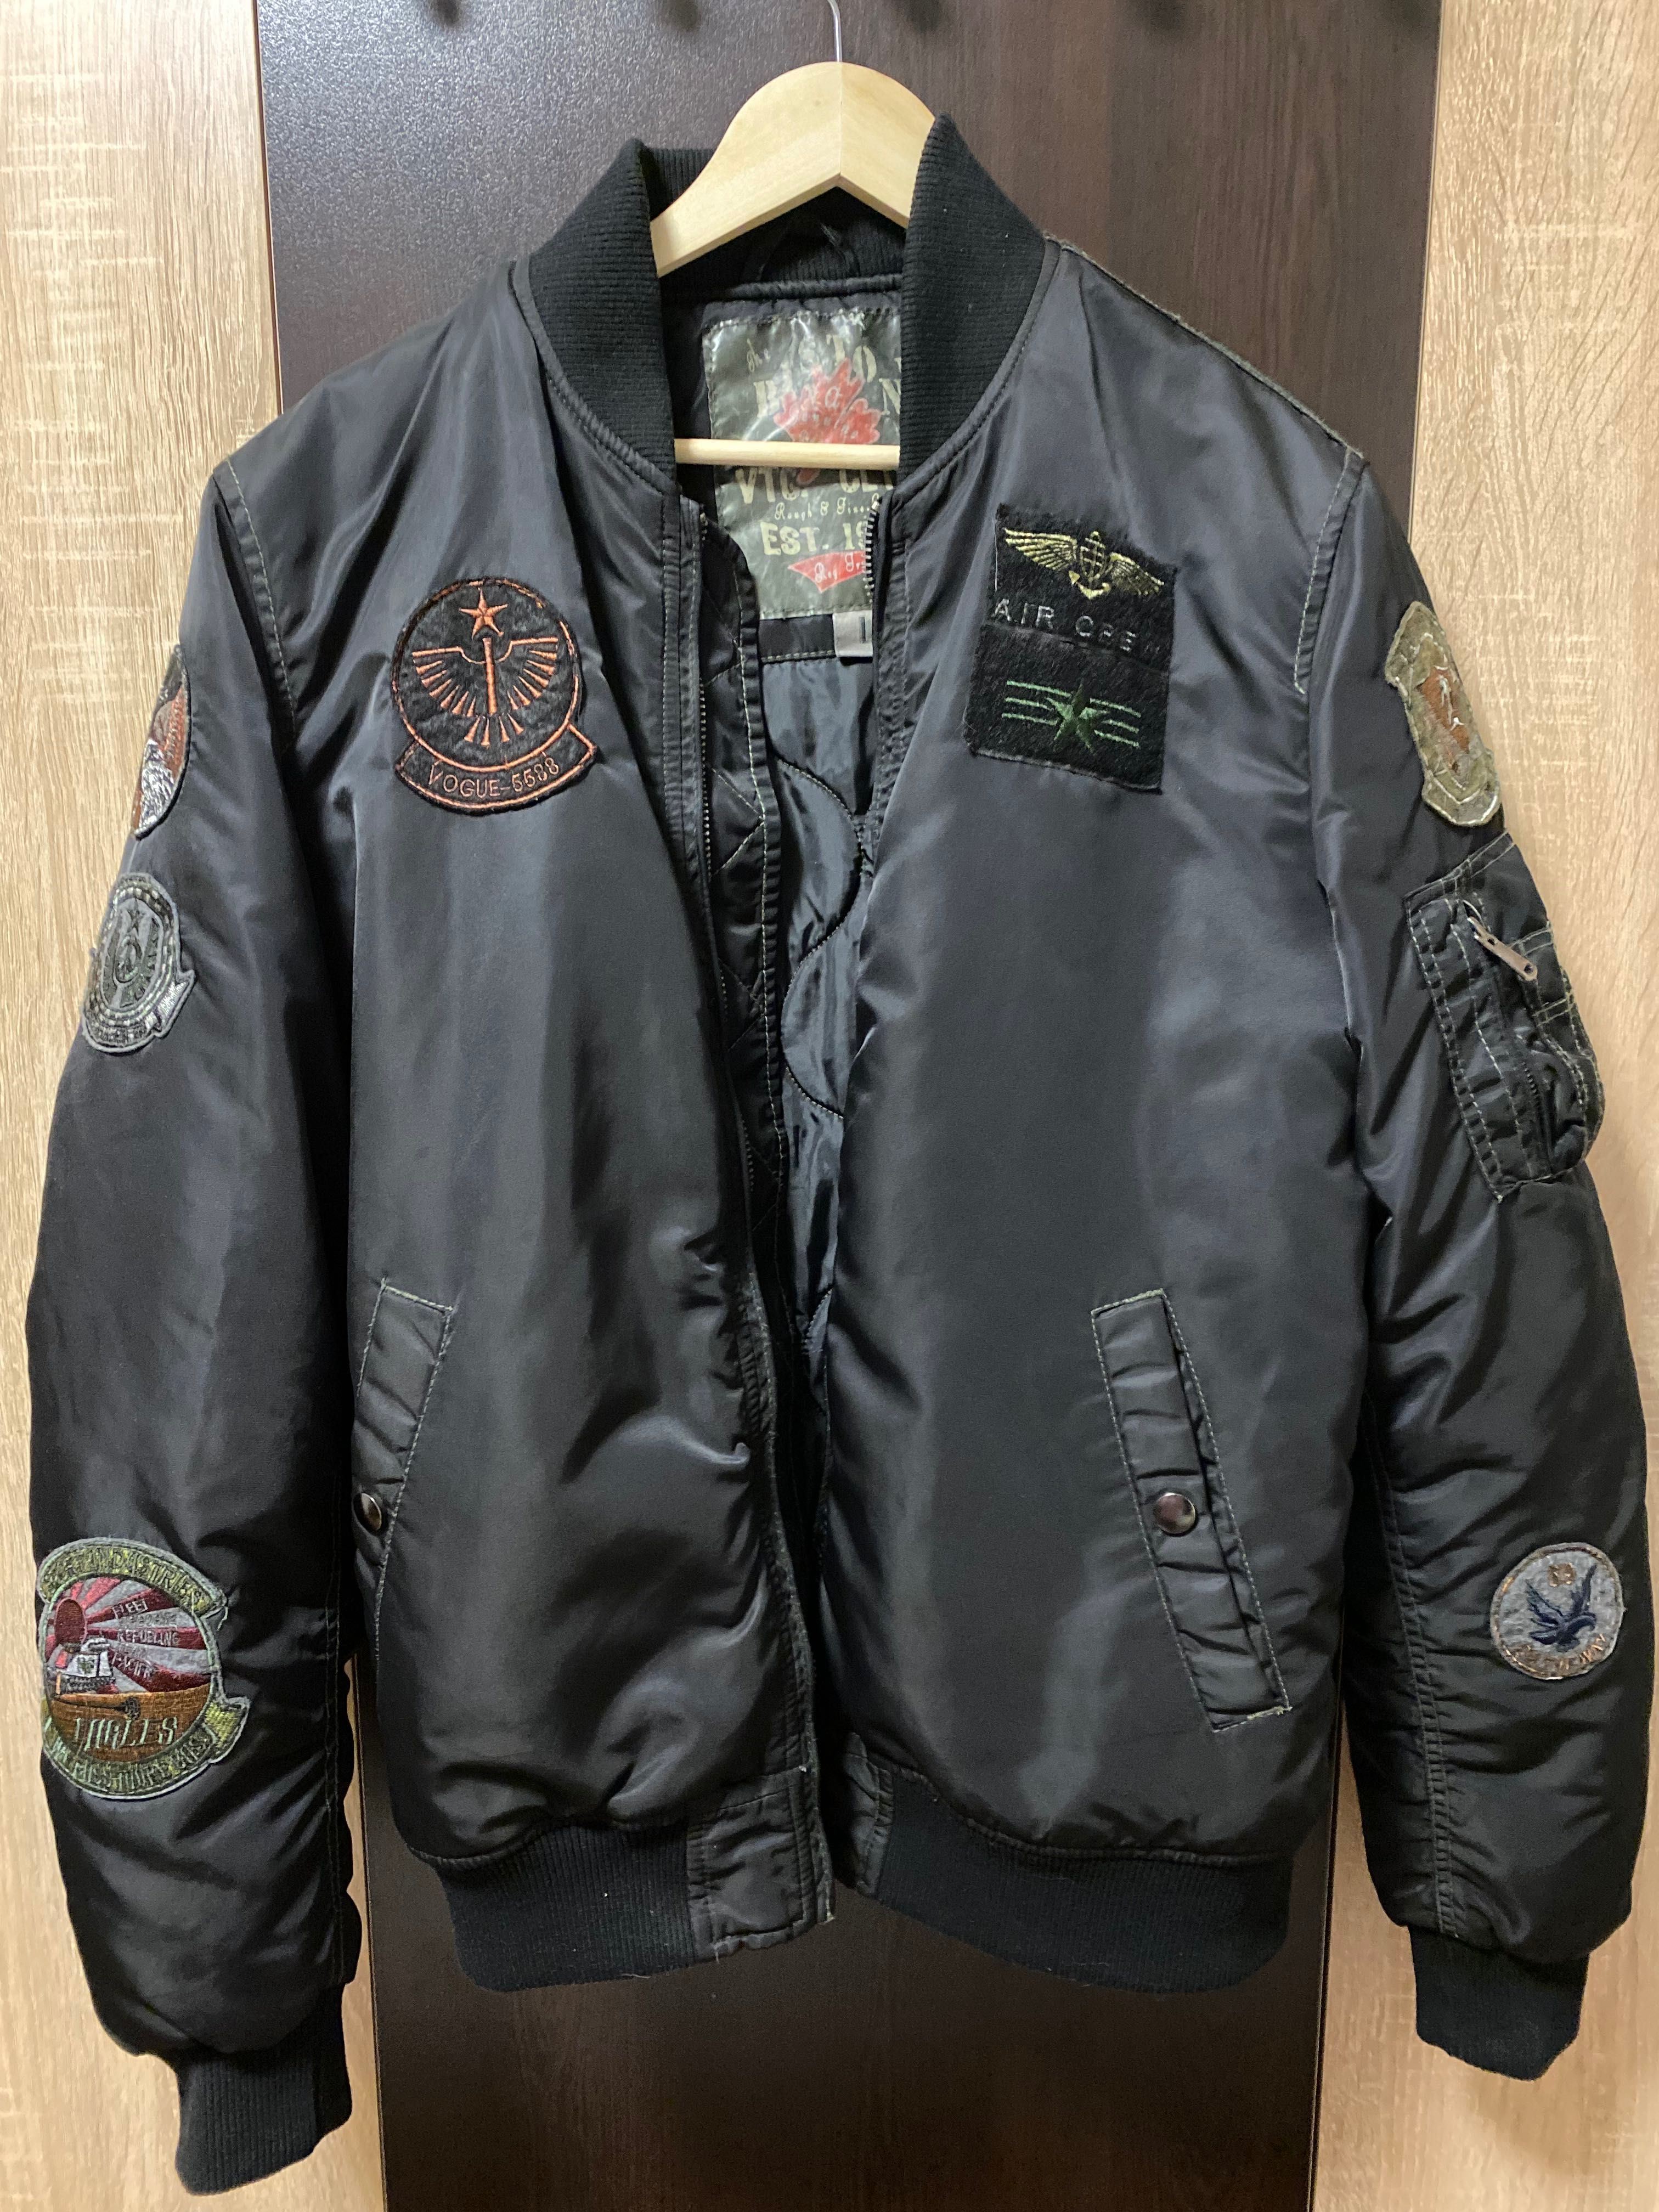 Biston bomber jacket